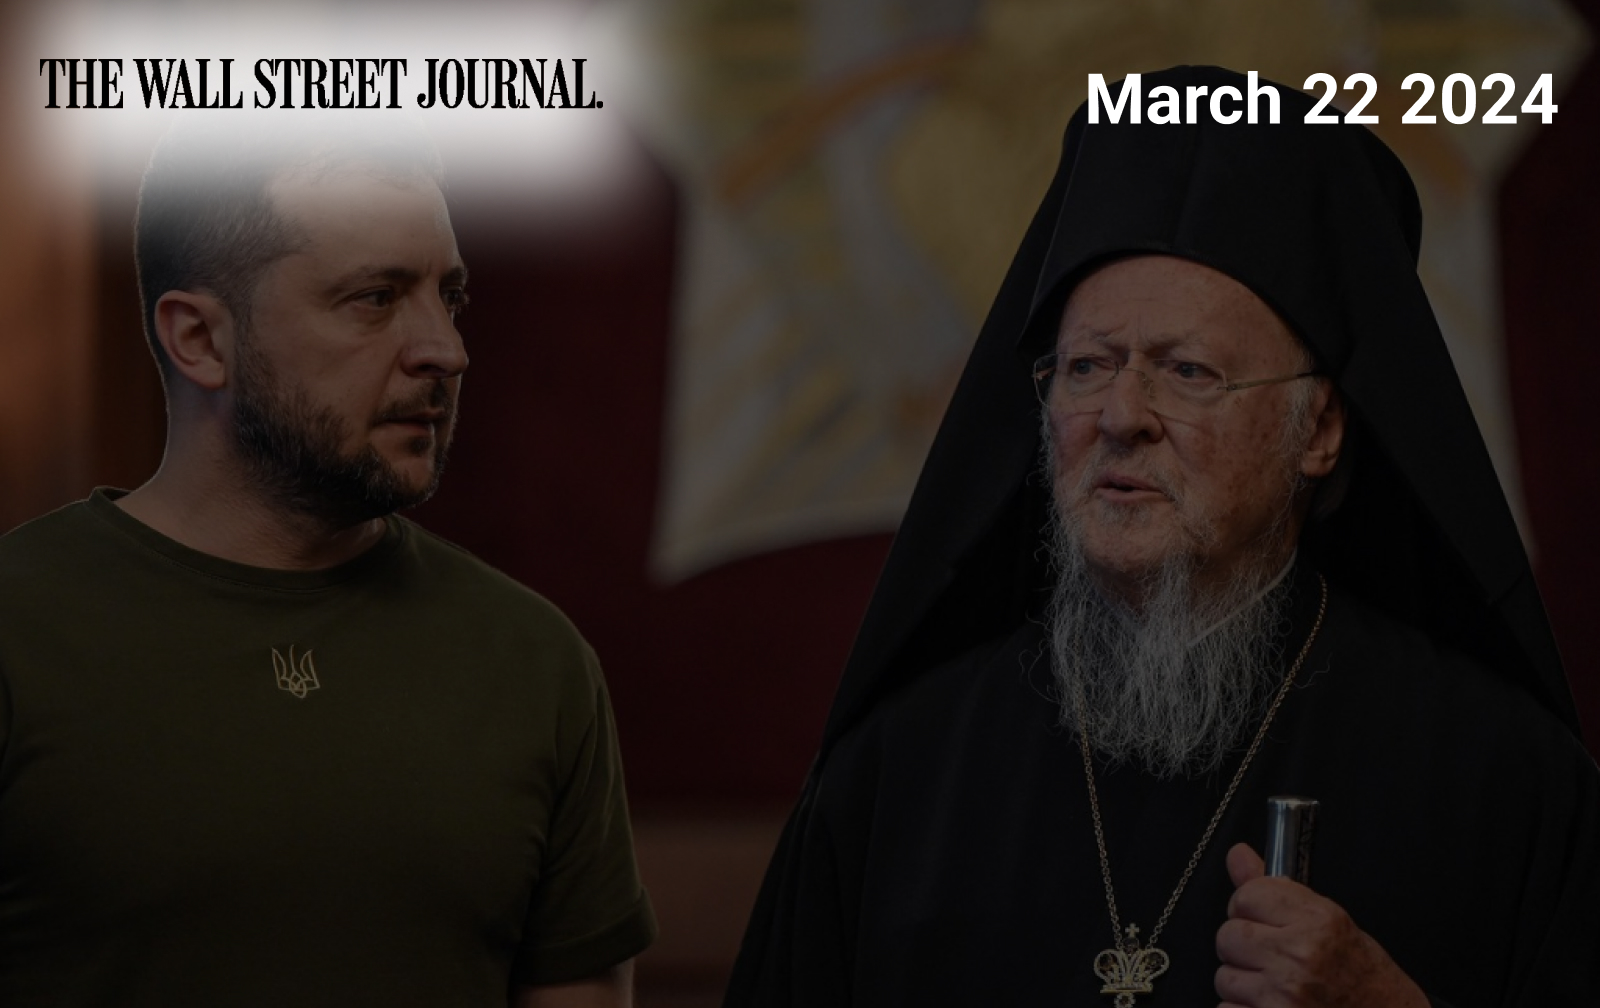 Is Religious Liberty ‘Under Attack’ in Ukraine?